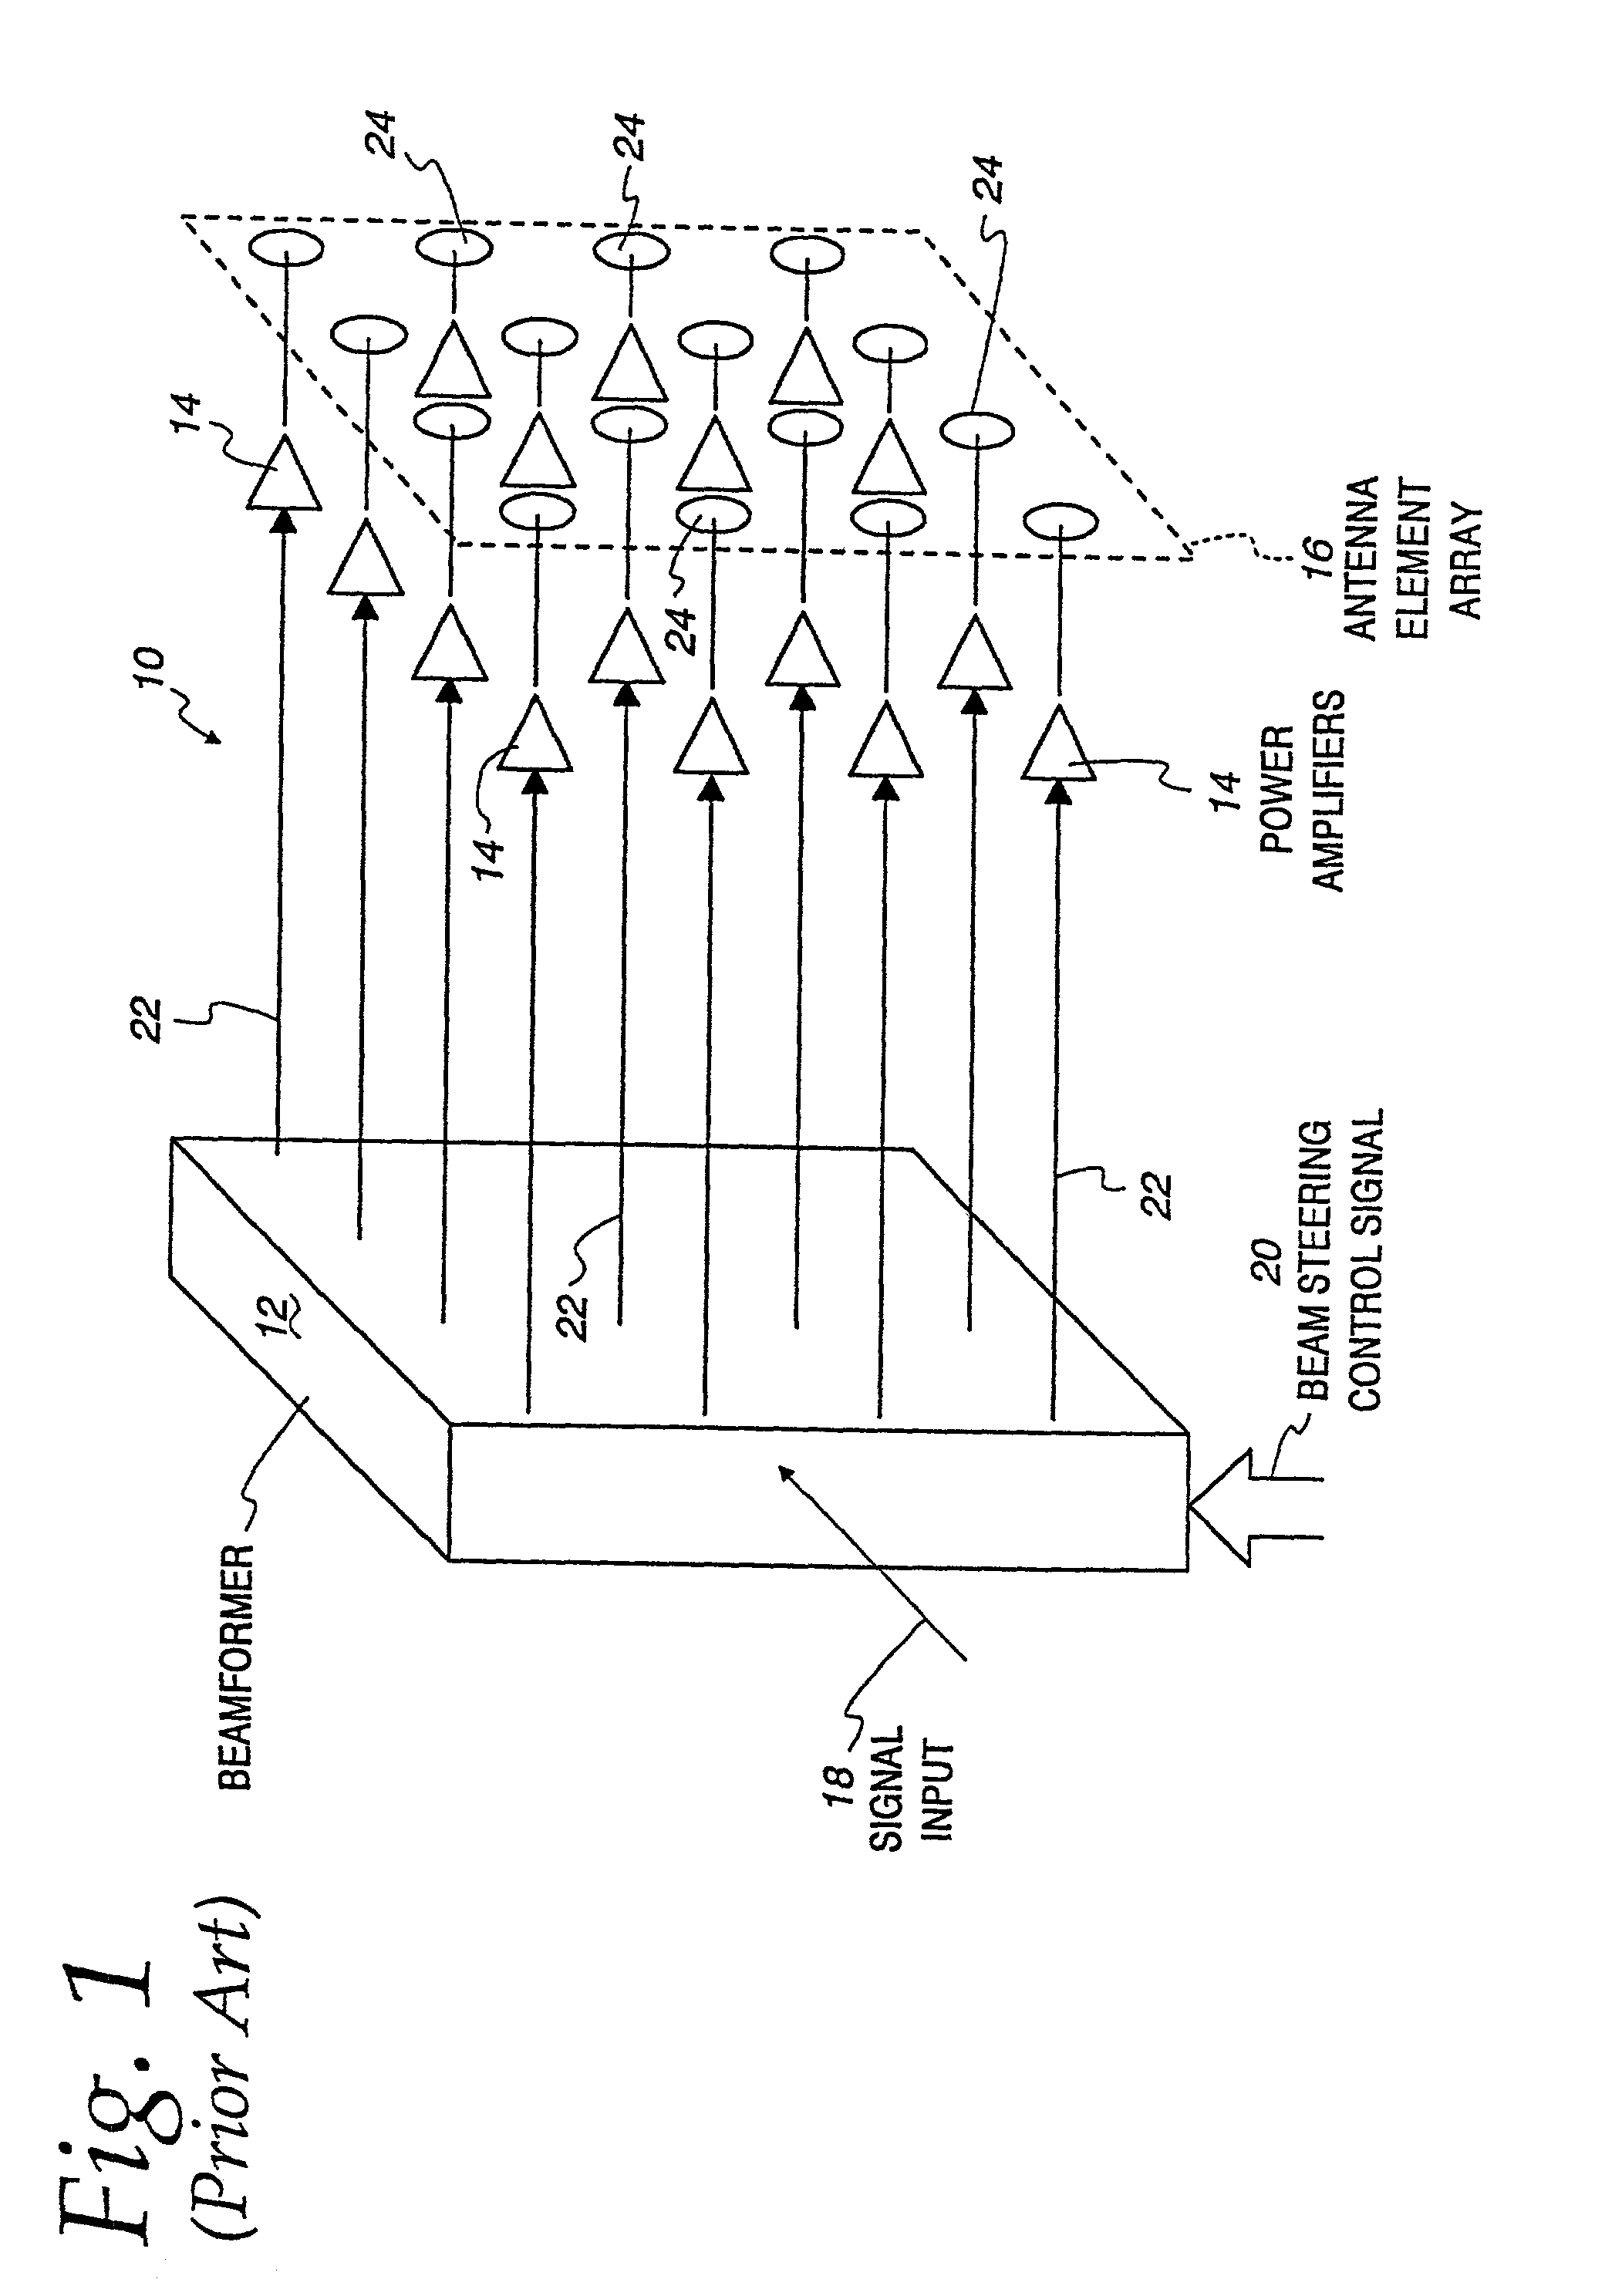 Multi-signal transmit array with low intermodulation